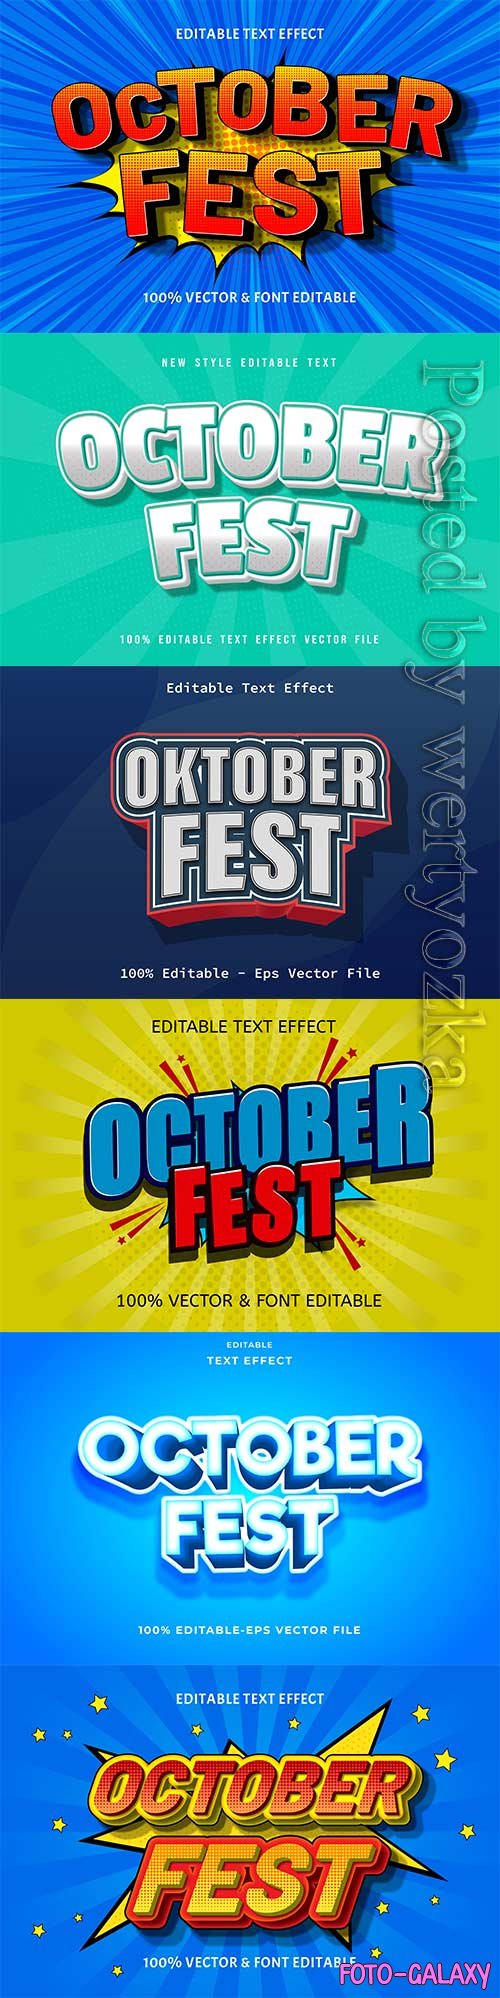 October fest editable text effect vol 9